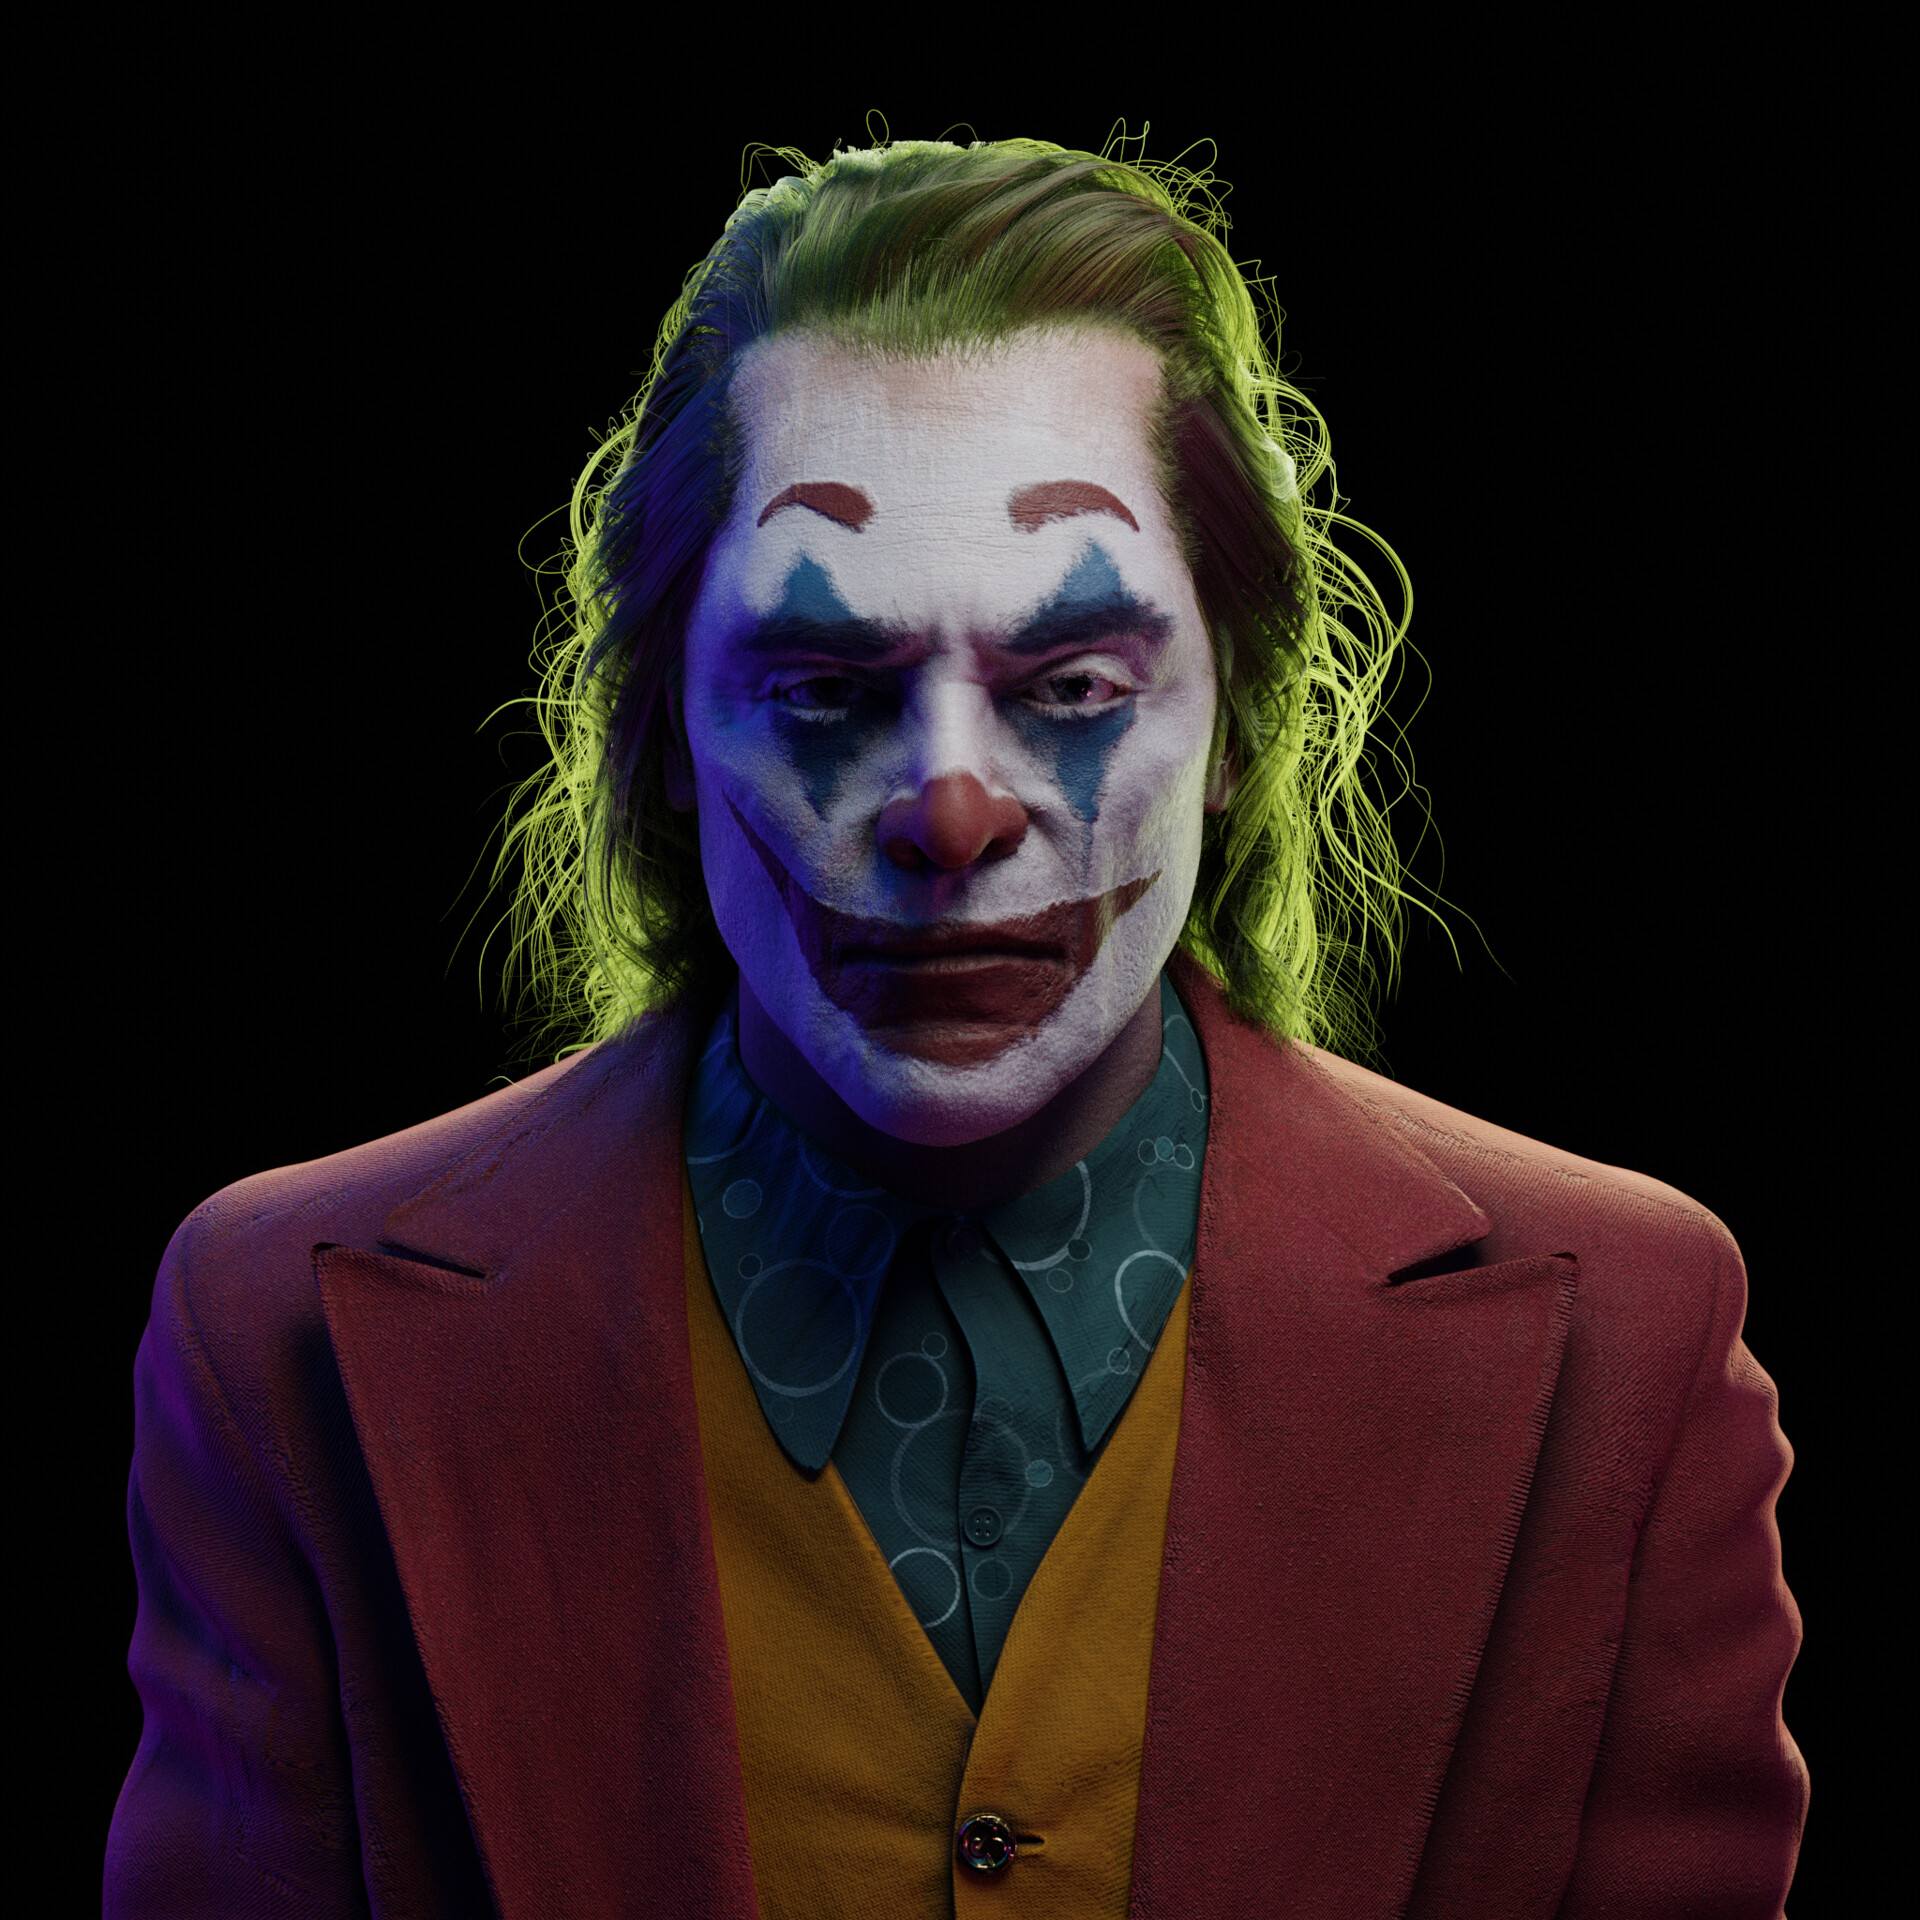 ArtStation - Joaquin phoenix as Joker.